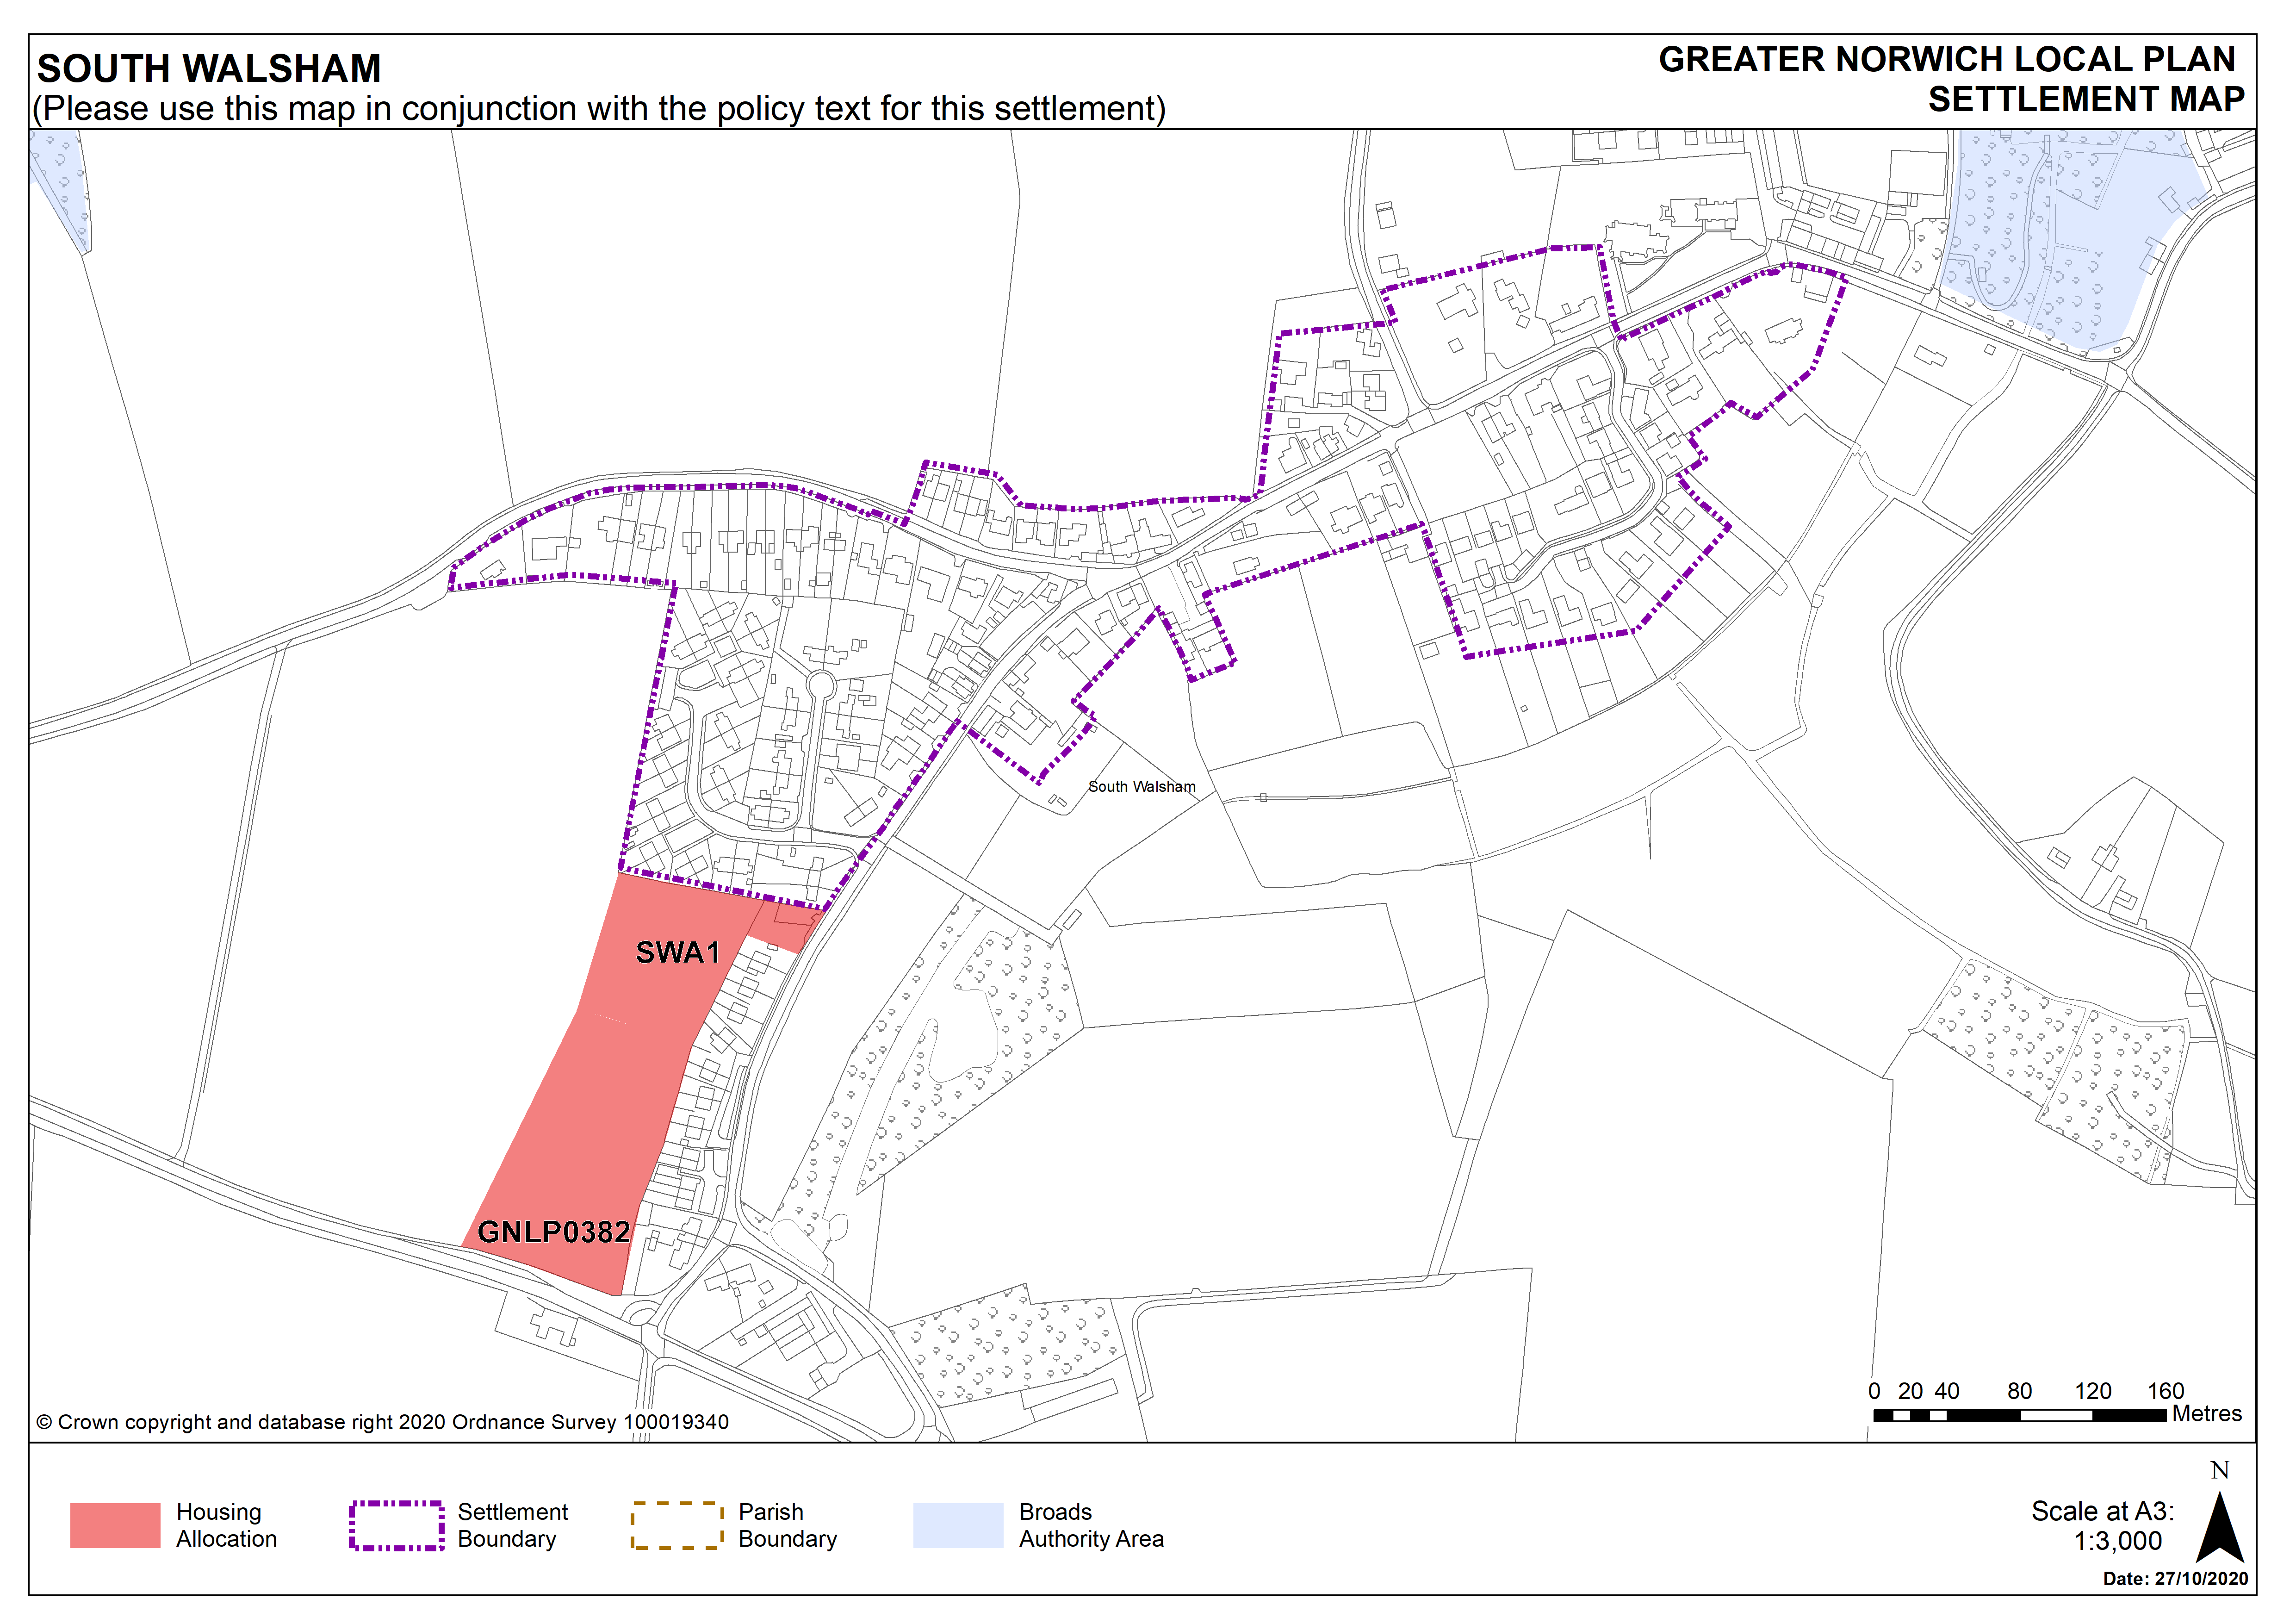 South Walsham Settlement Map